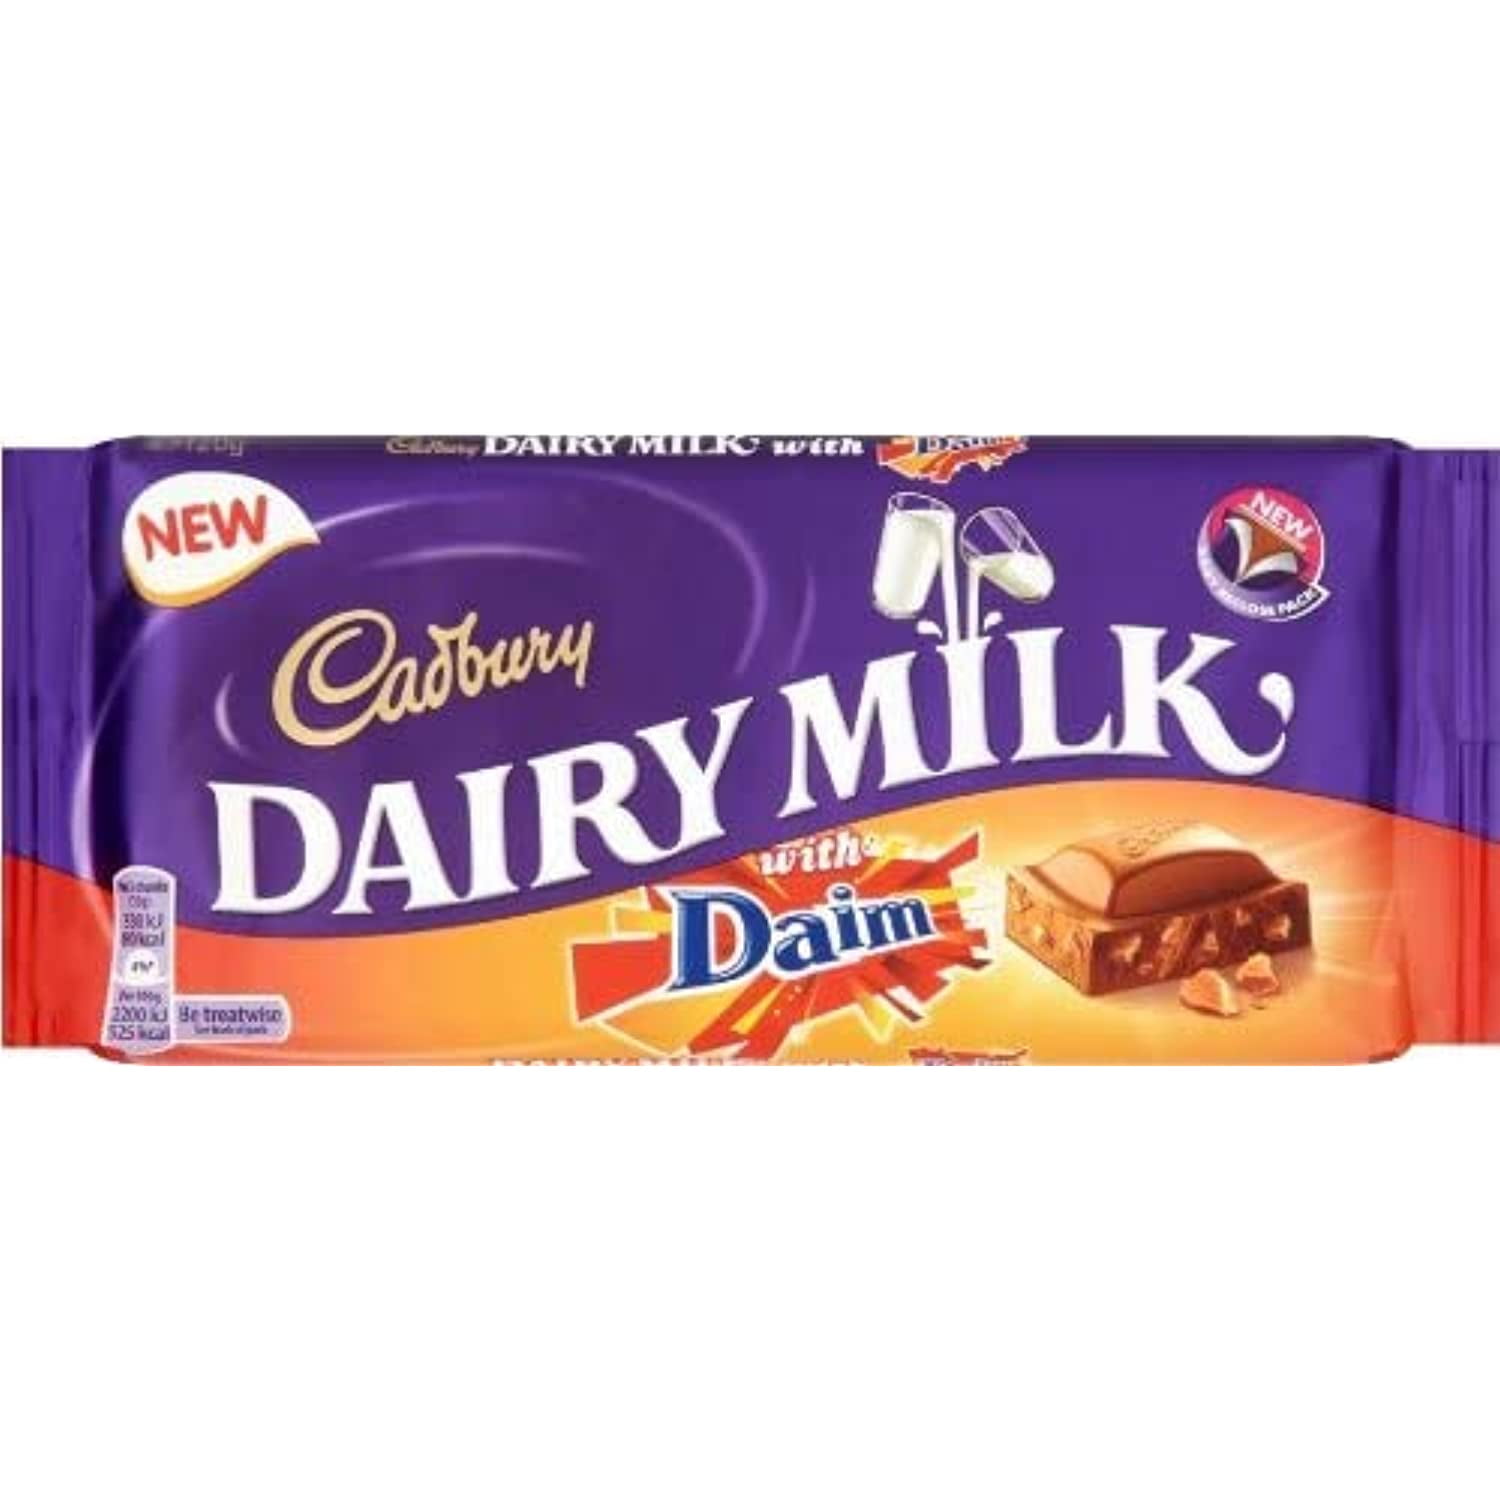 Cadbury Dairy Milk Most Popular Chocolate Bars From England- Whole Nut,  Caramel, Fruit & Nut, Oreo, Plain, Daim